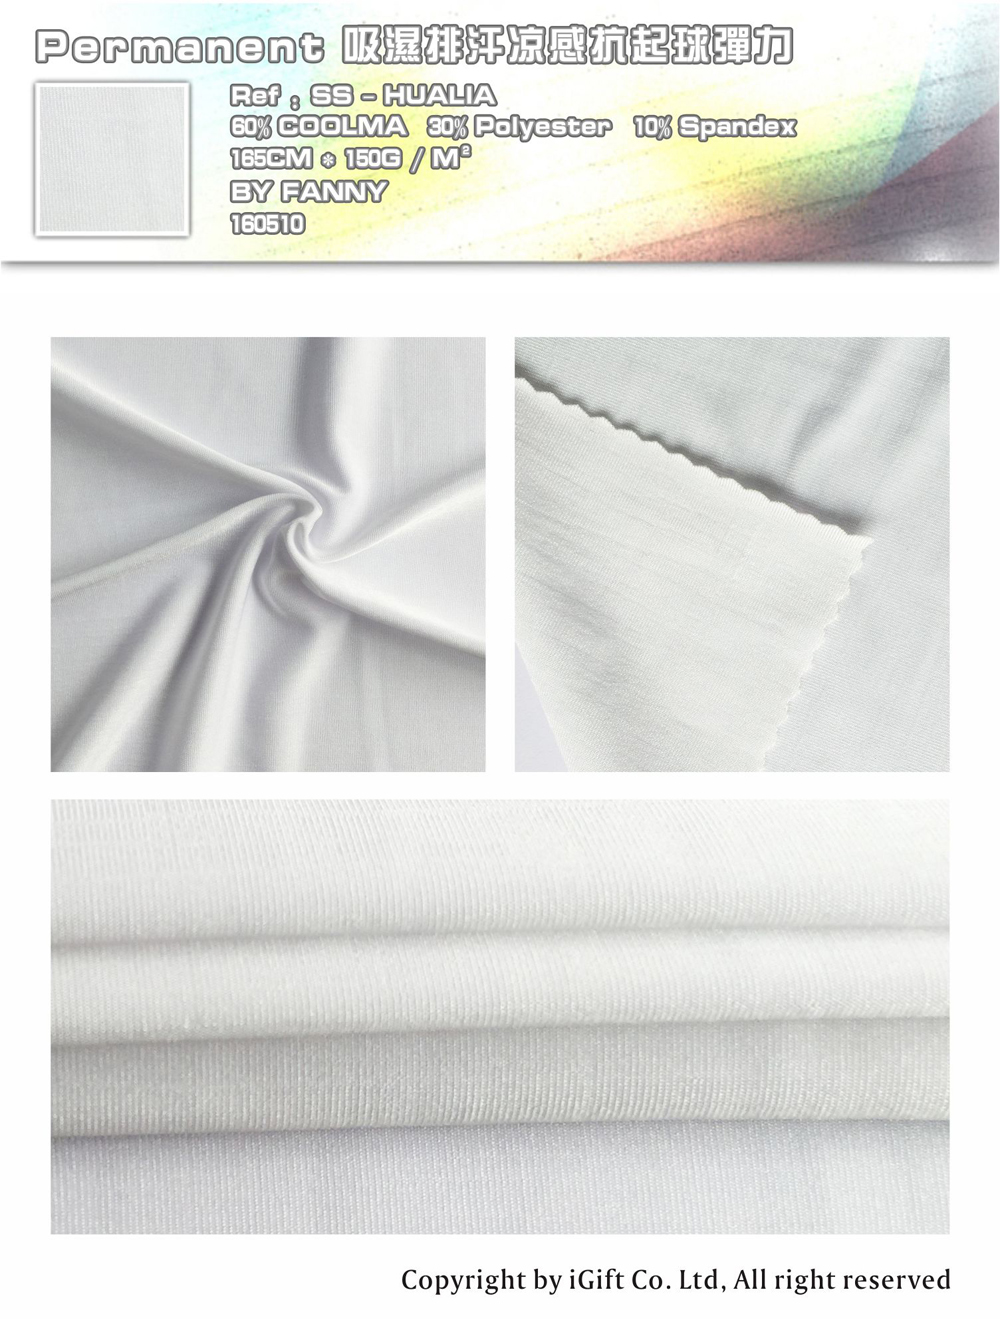 Permanent 吸濕排汗凉感抗起球彈力        Ref:SS-HUALIA    60％ Coolma yarn   30％Polyester 10％Spandex     165CM*150G/M²   BY  FANNY   160510